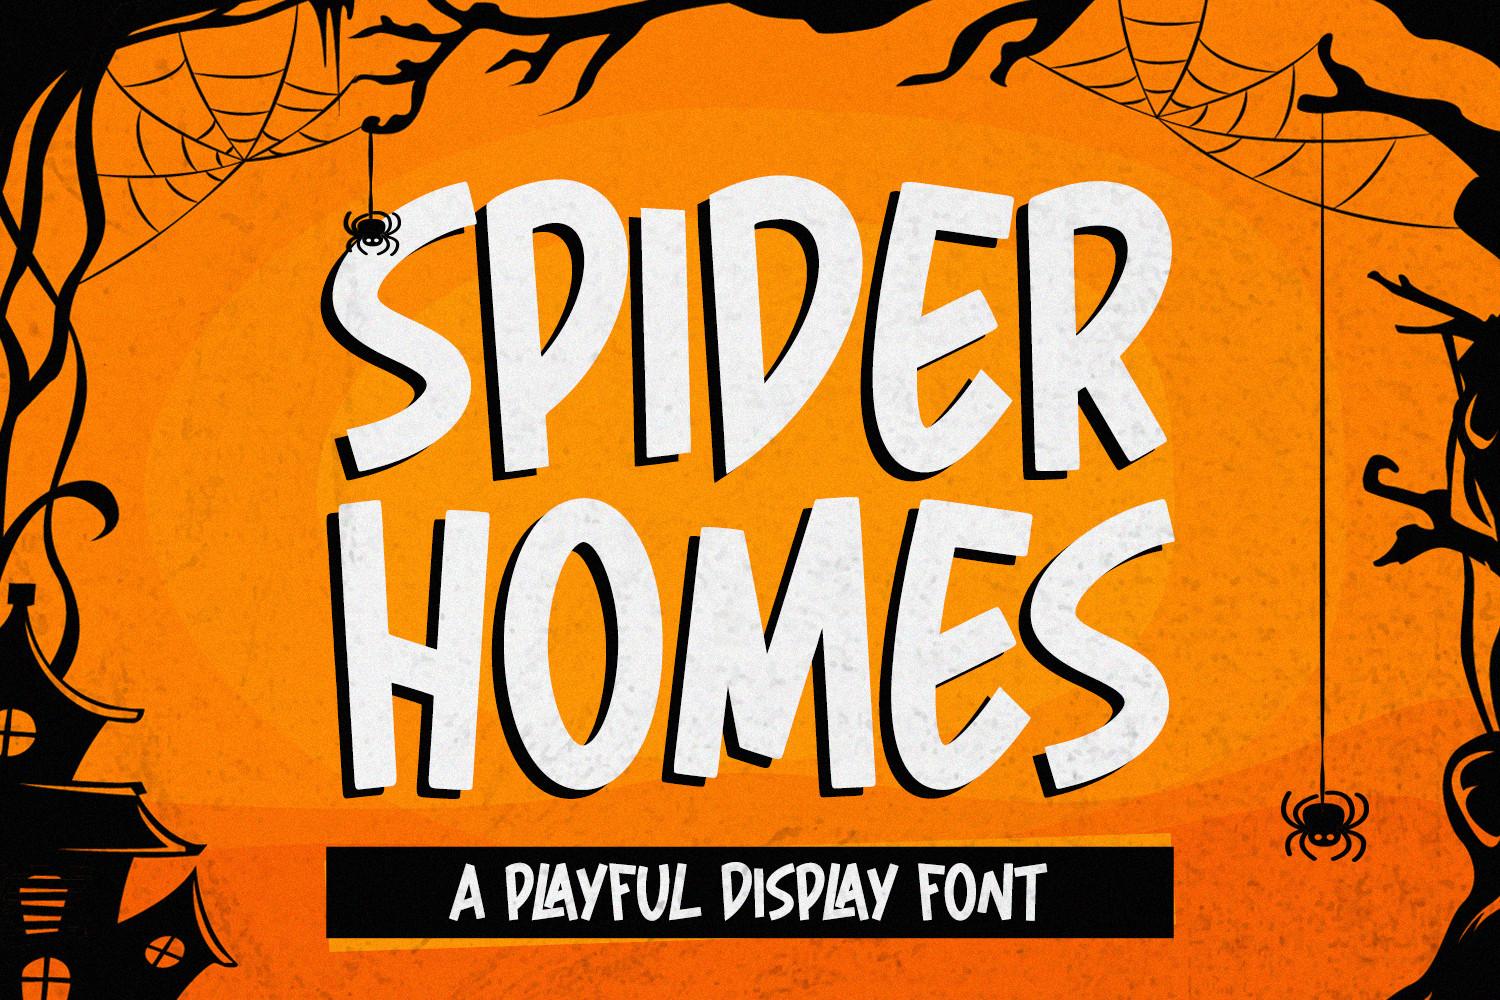 Spider Home Font